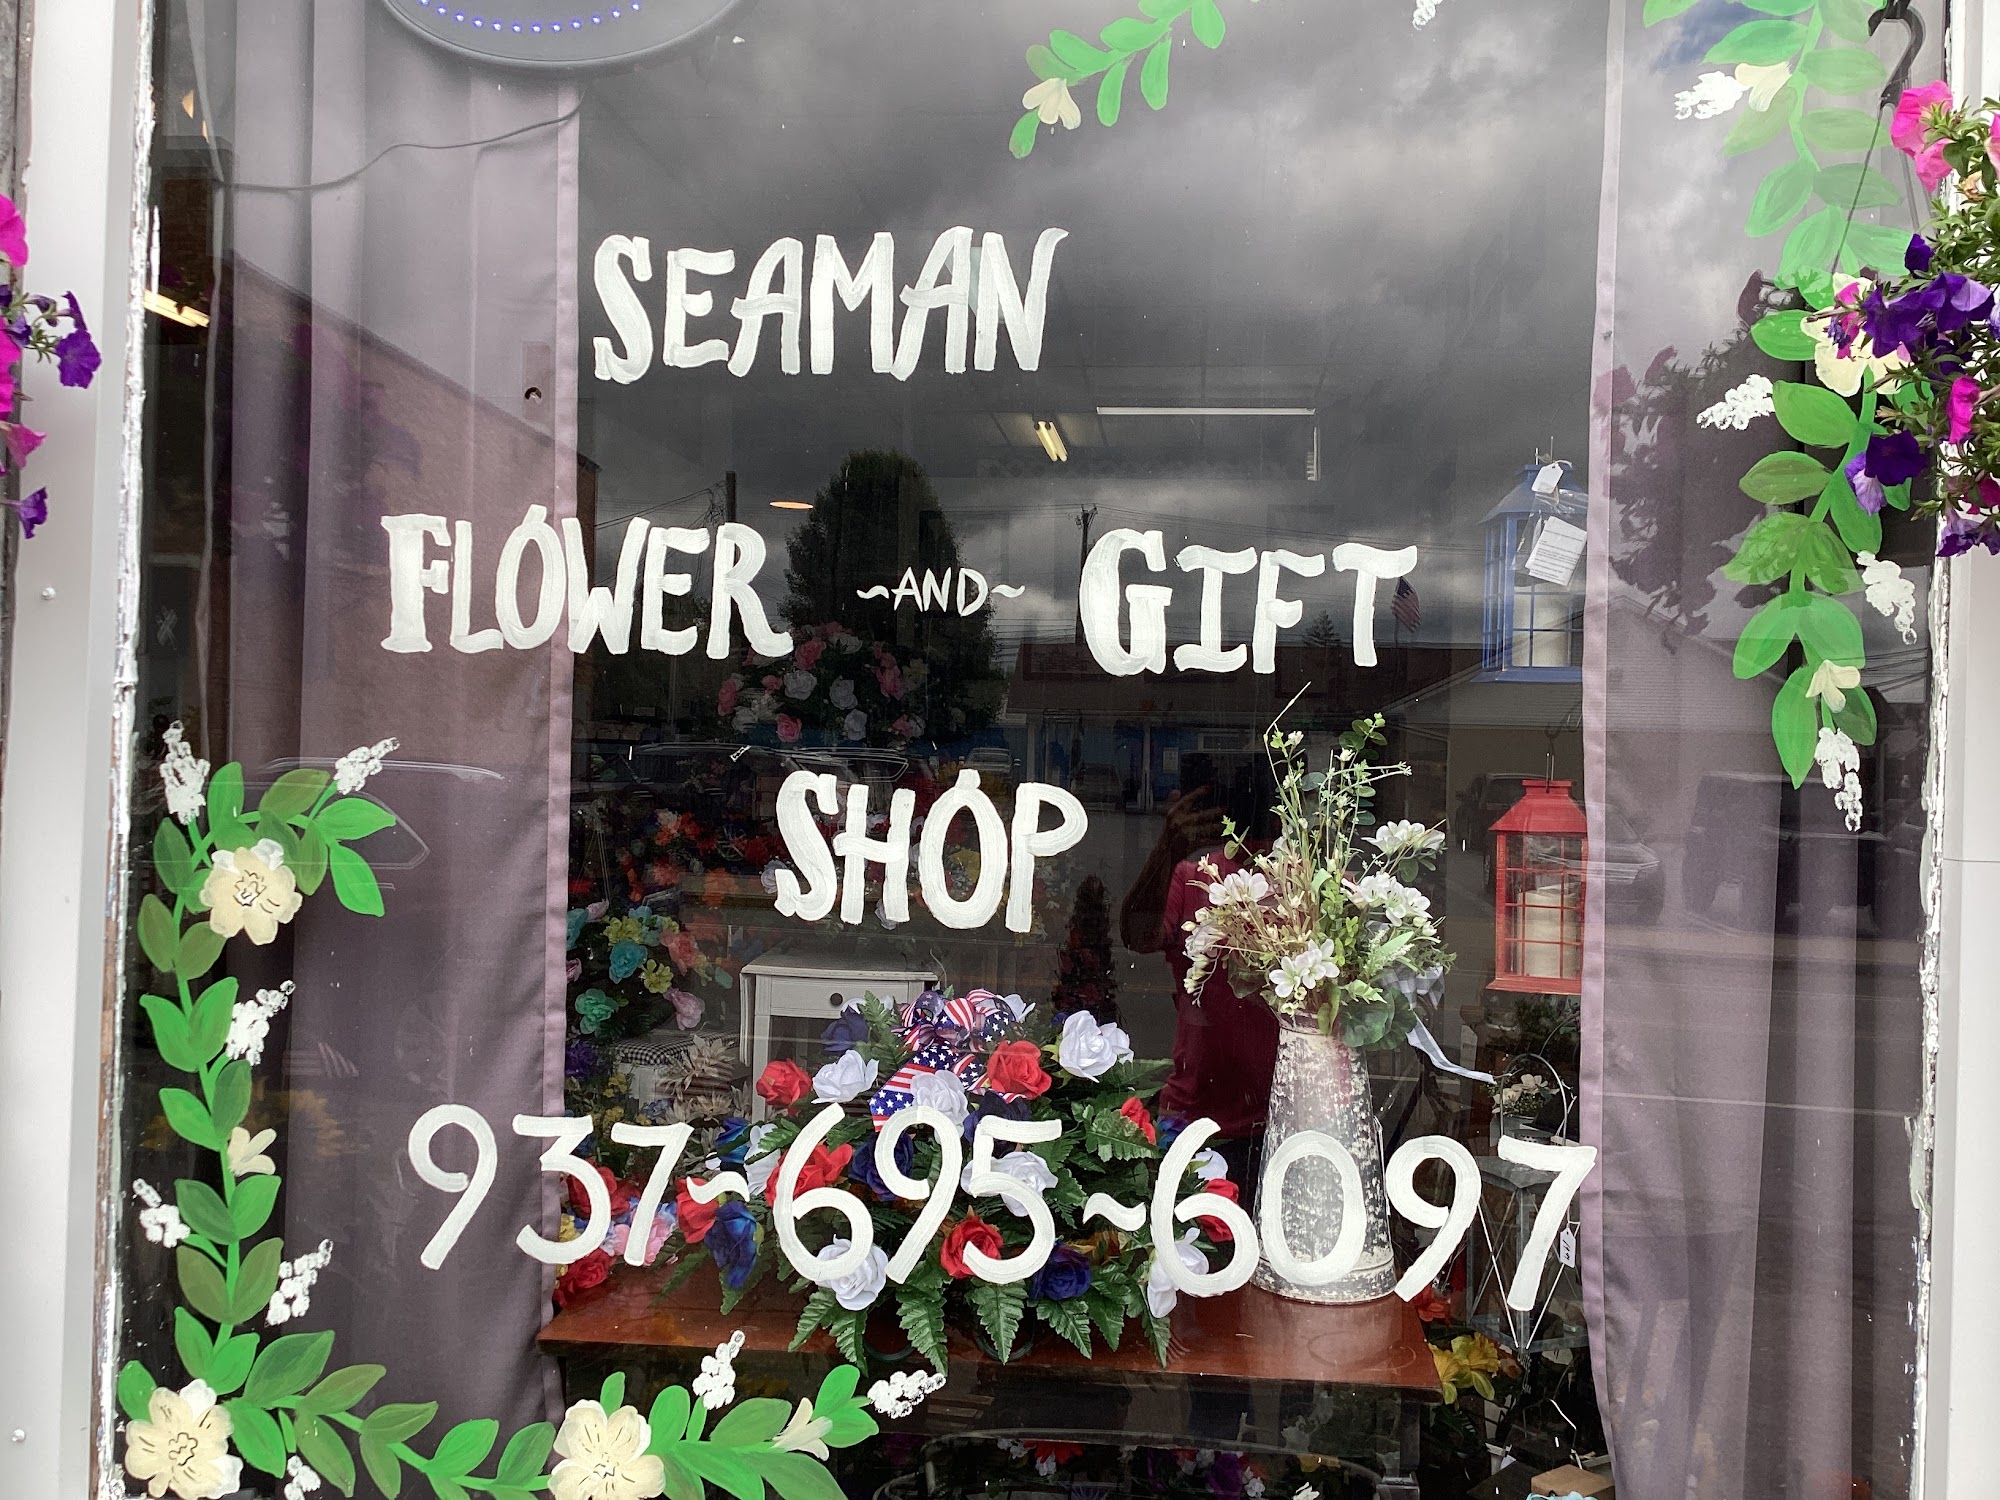 Seaman Flower & Gift Shop 17866 OH-247, Seaman Ohio 45679